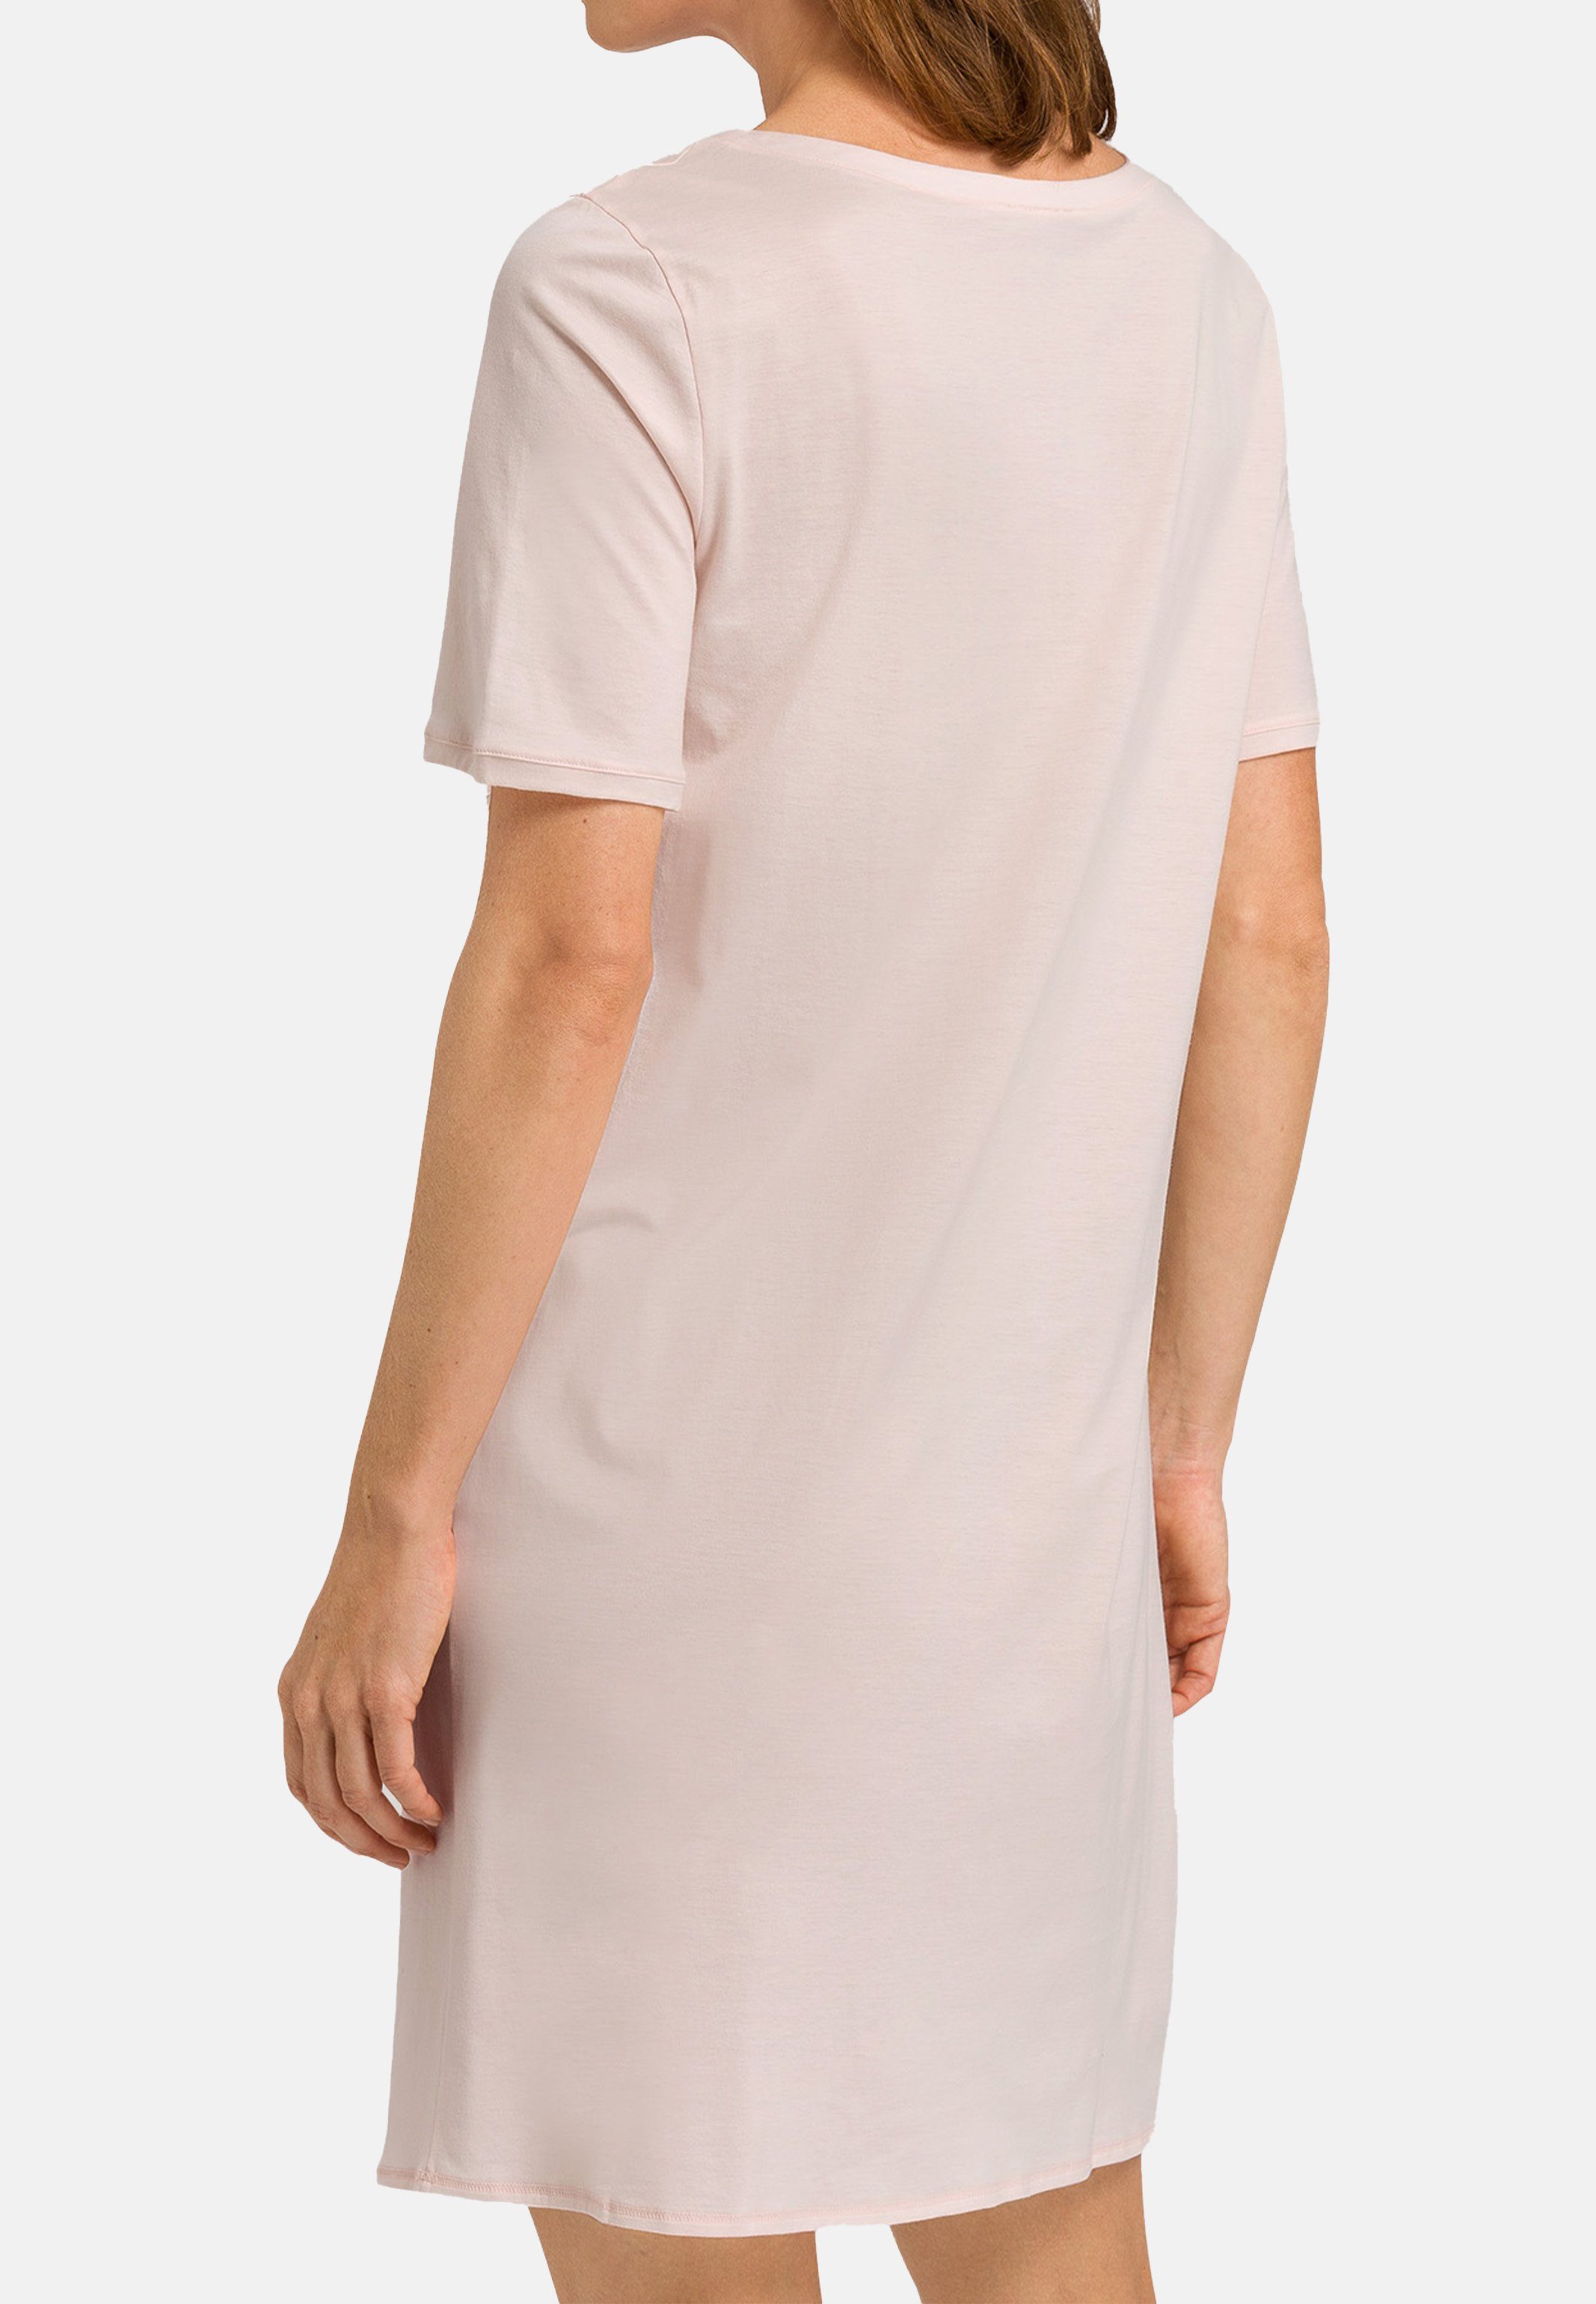 Nachthemd Cotton - Baumwolle Atmungsaktiv Deluxe Crystal - 1334 Hanro Pink - Nachthemd (1-tlg)